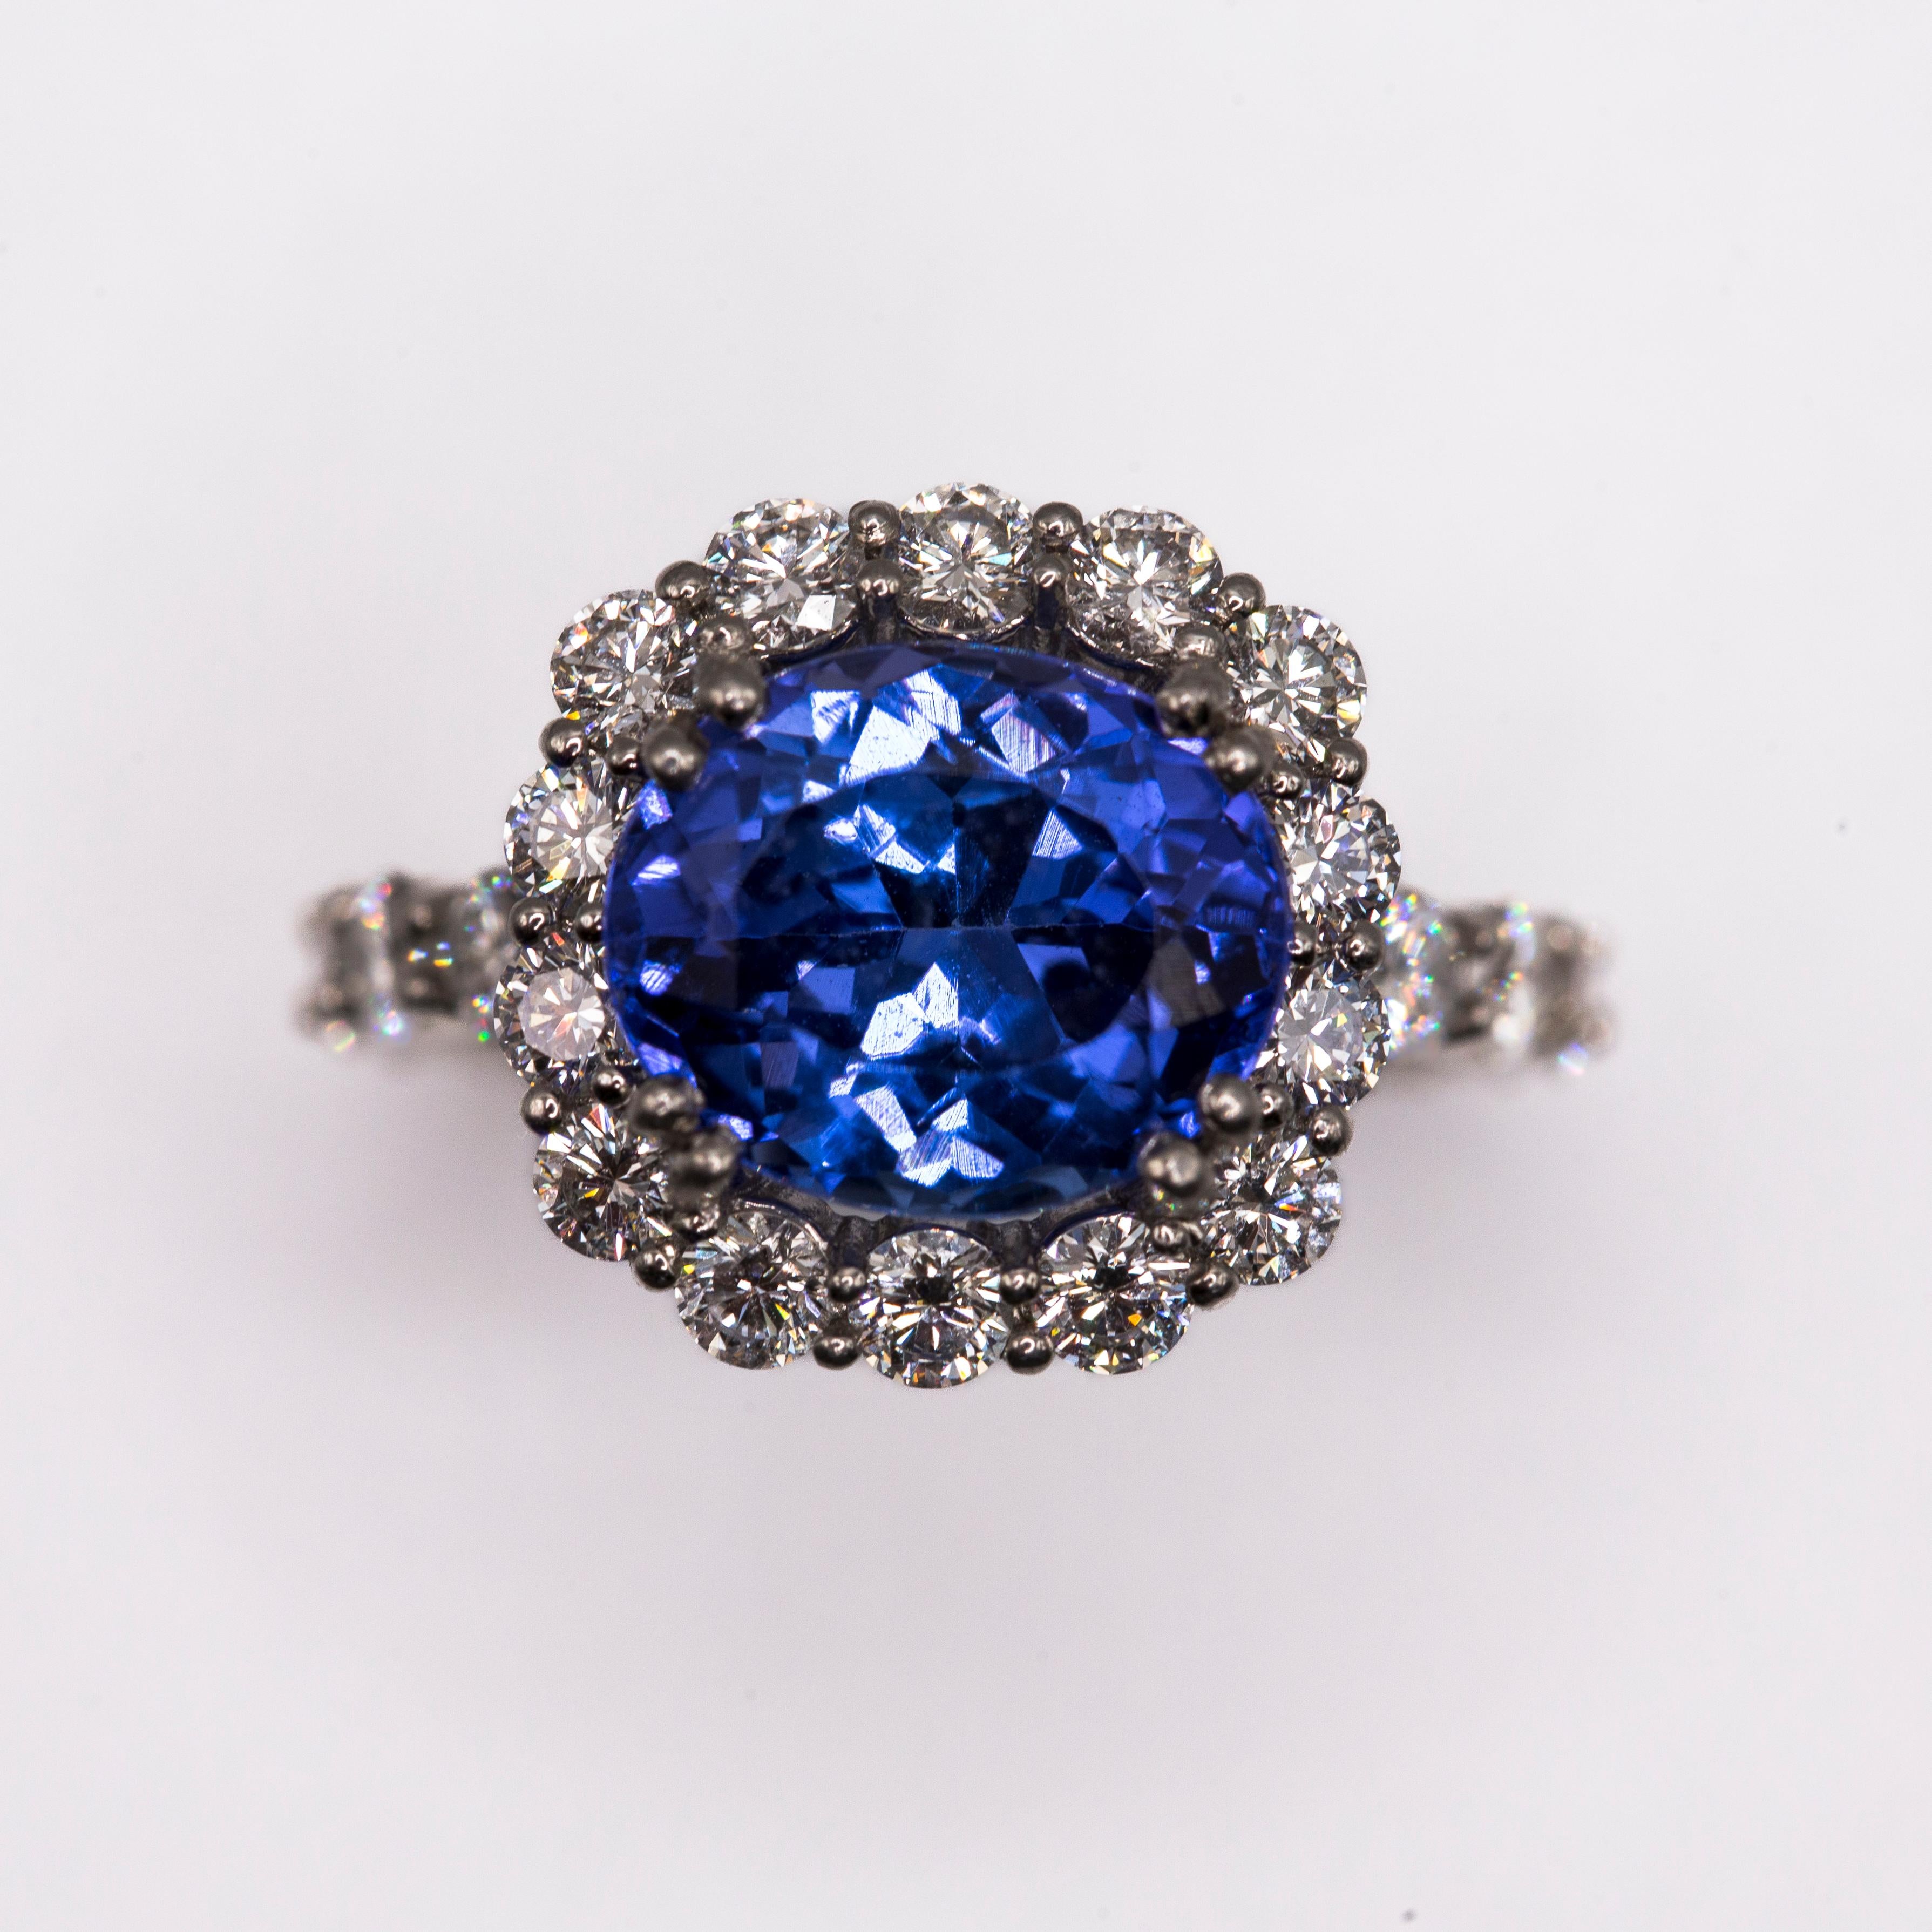 7.80 carats total Ceylon oval sapphire and diamond 950 Platinum Diamond Ring For Sale 1